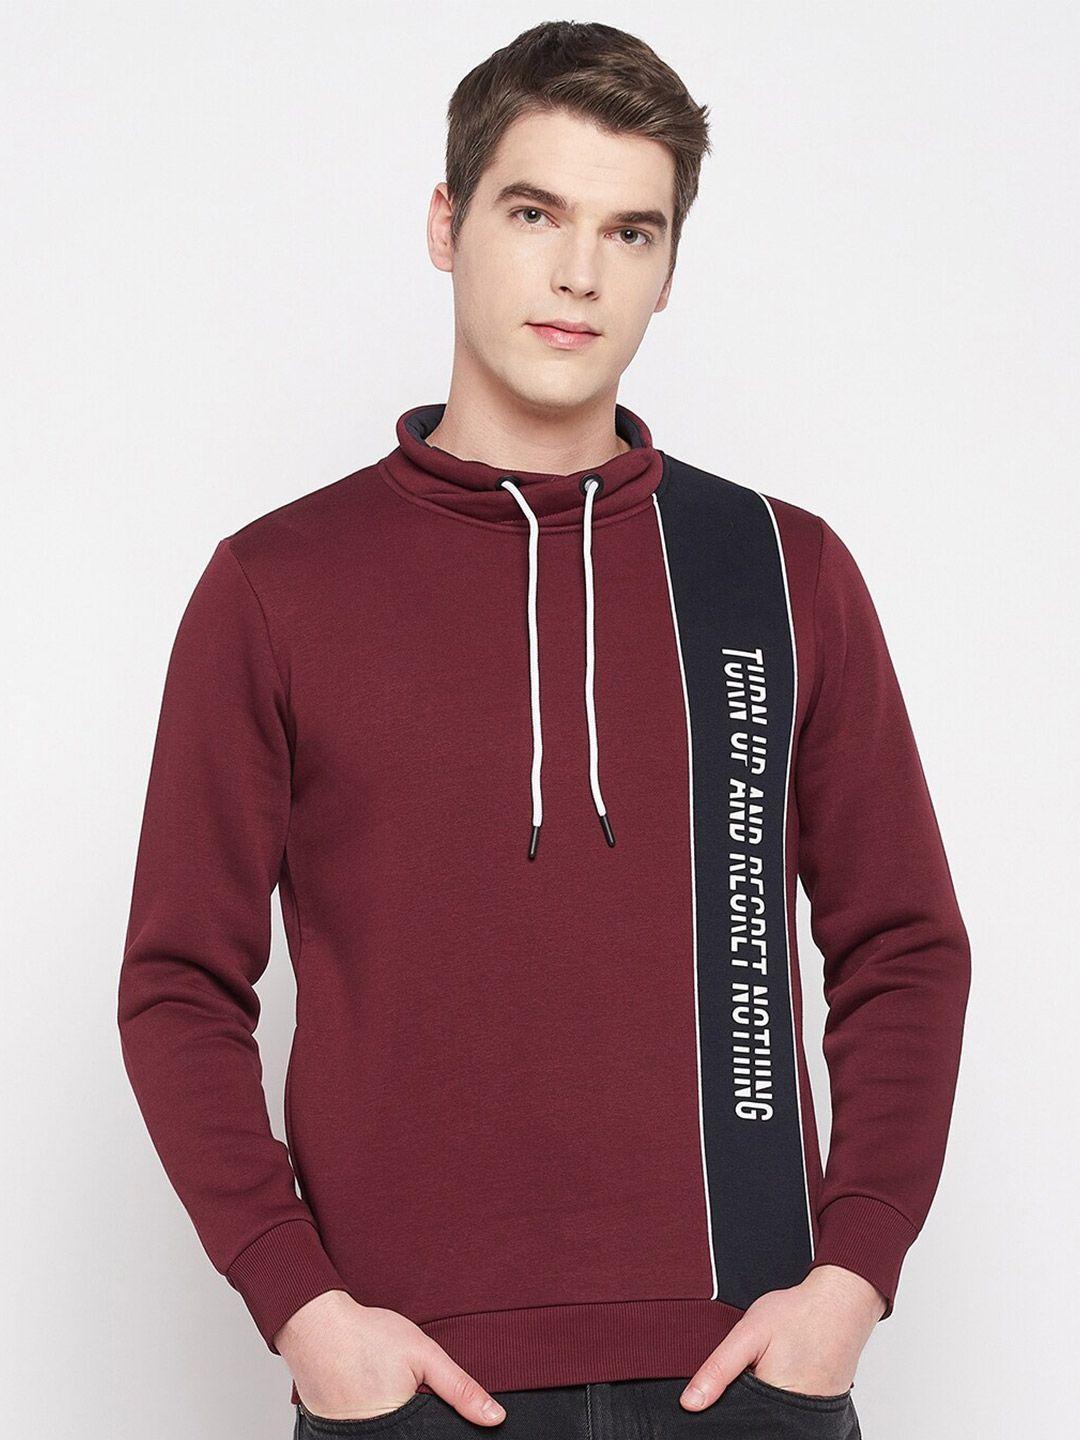 qubic men typography printed hooded pullover sweatshirt